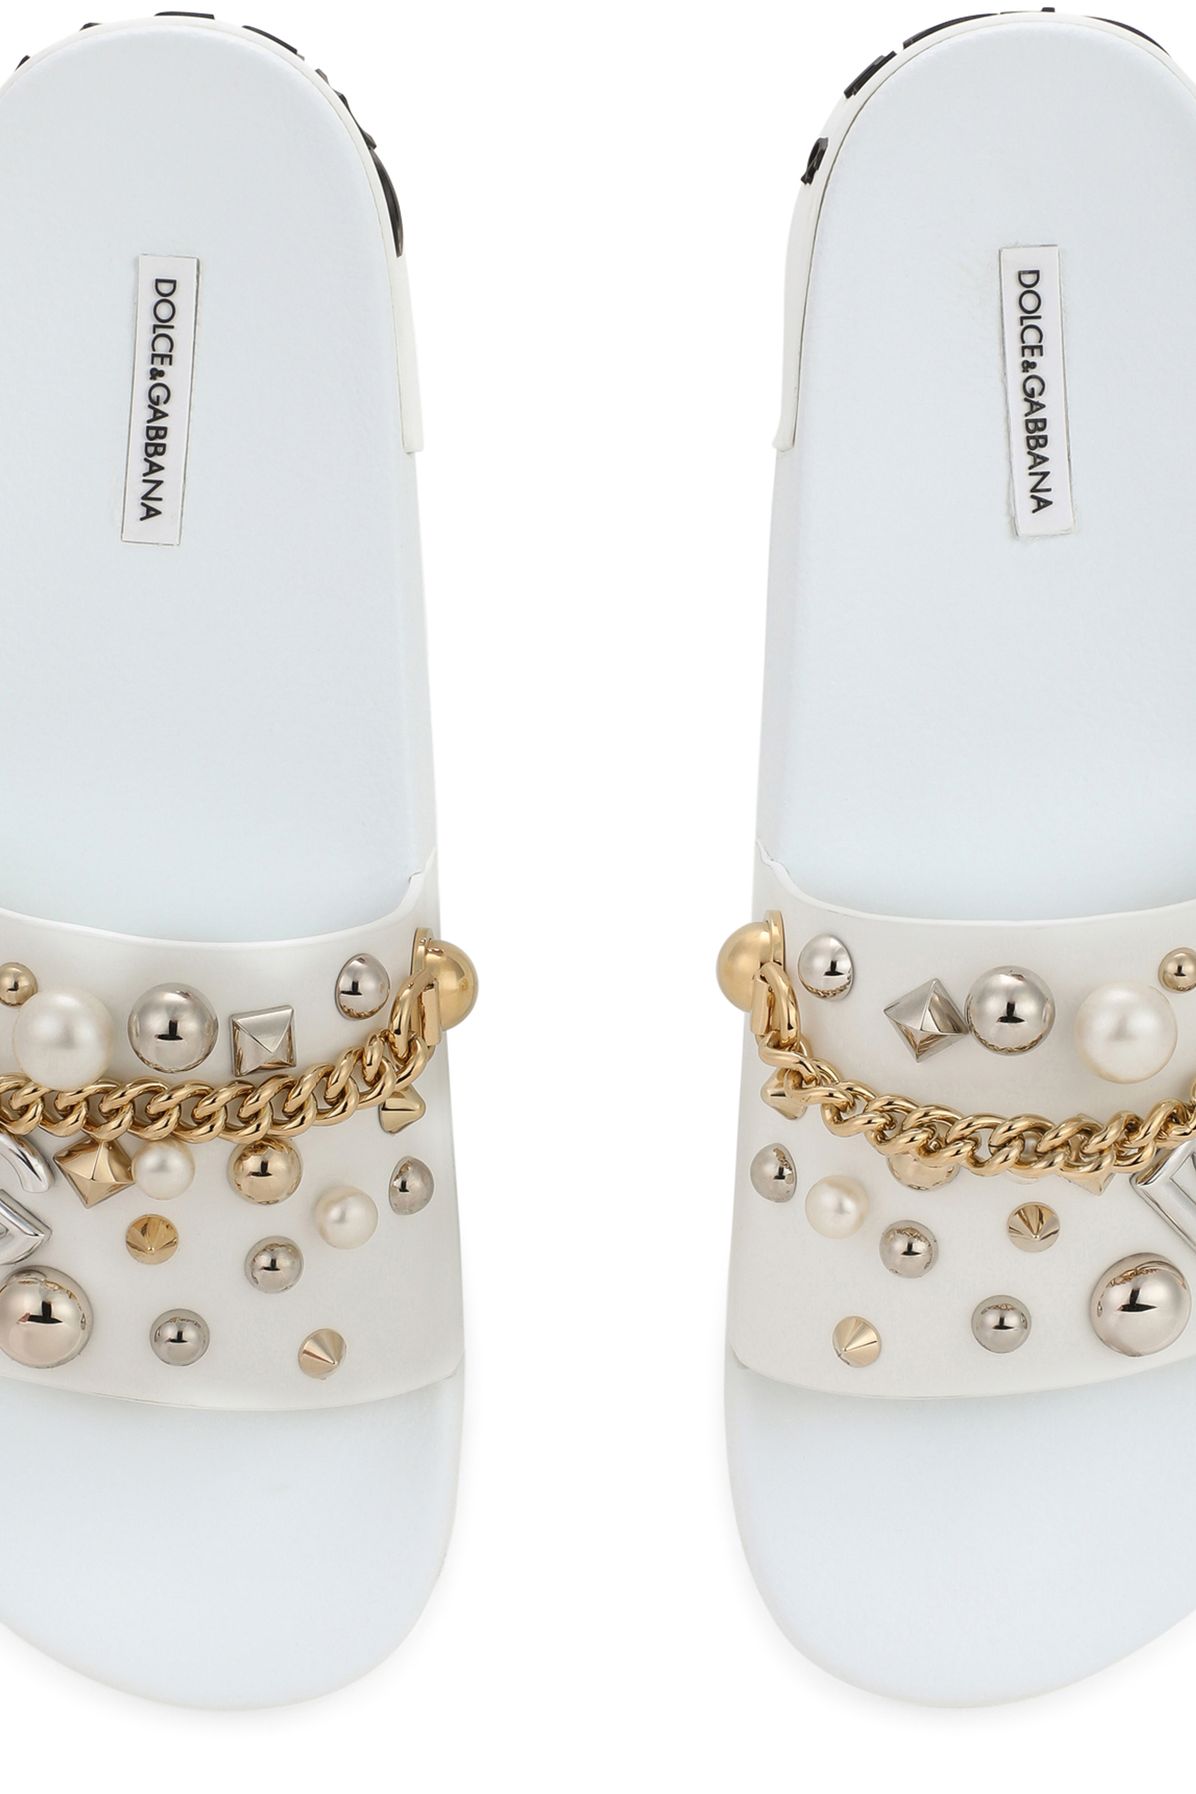 Dolce & Gabbana Rubber beachwear sliders